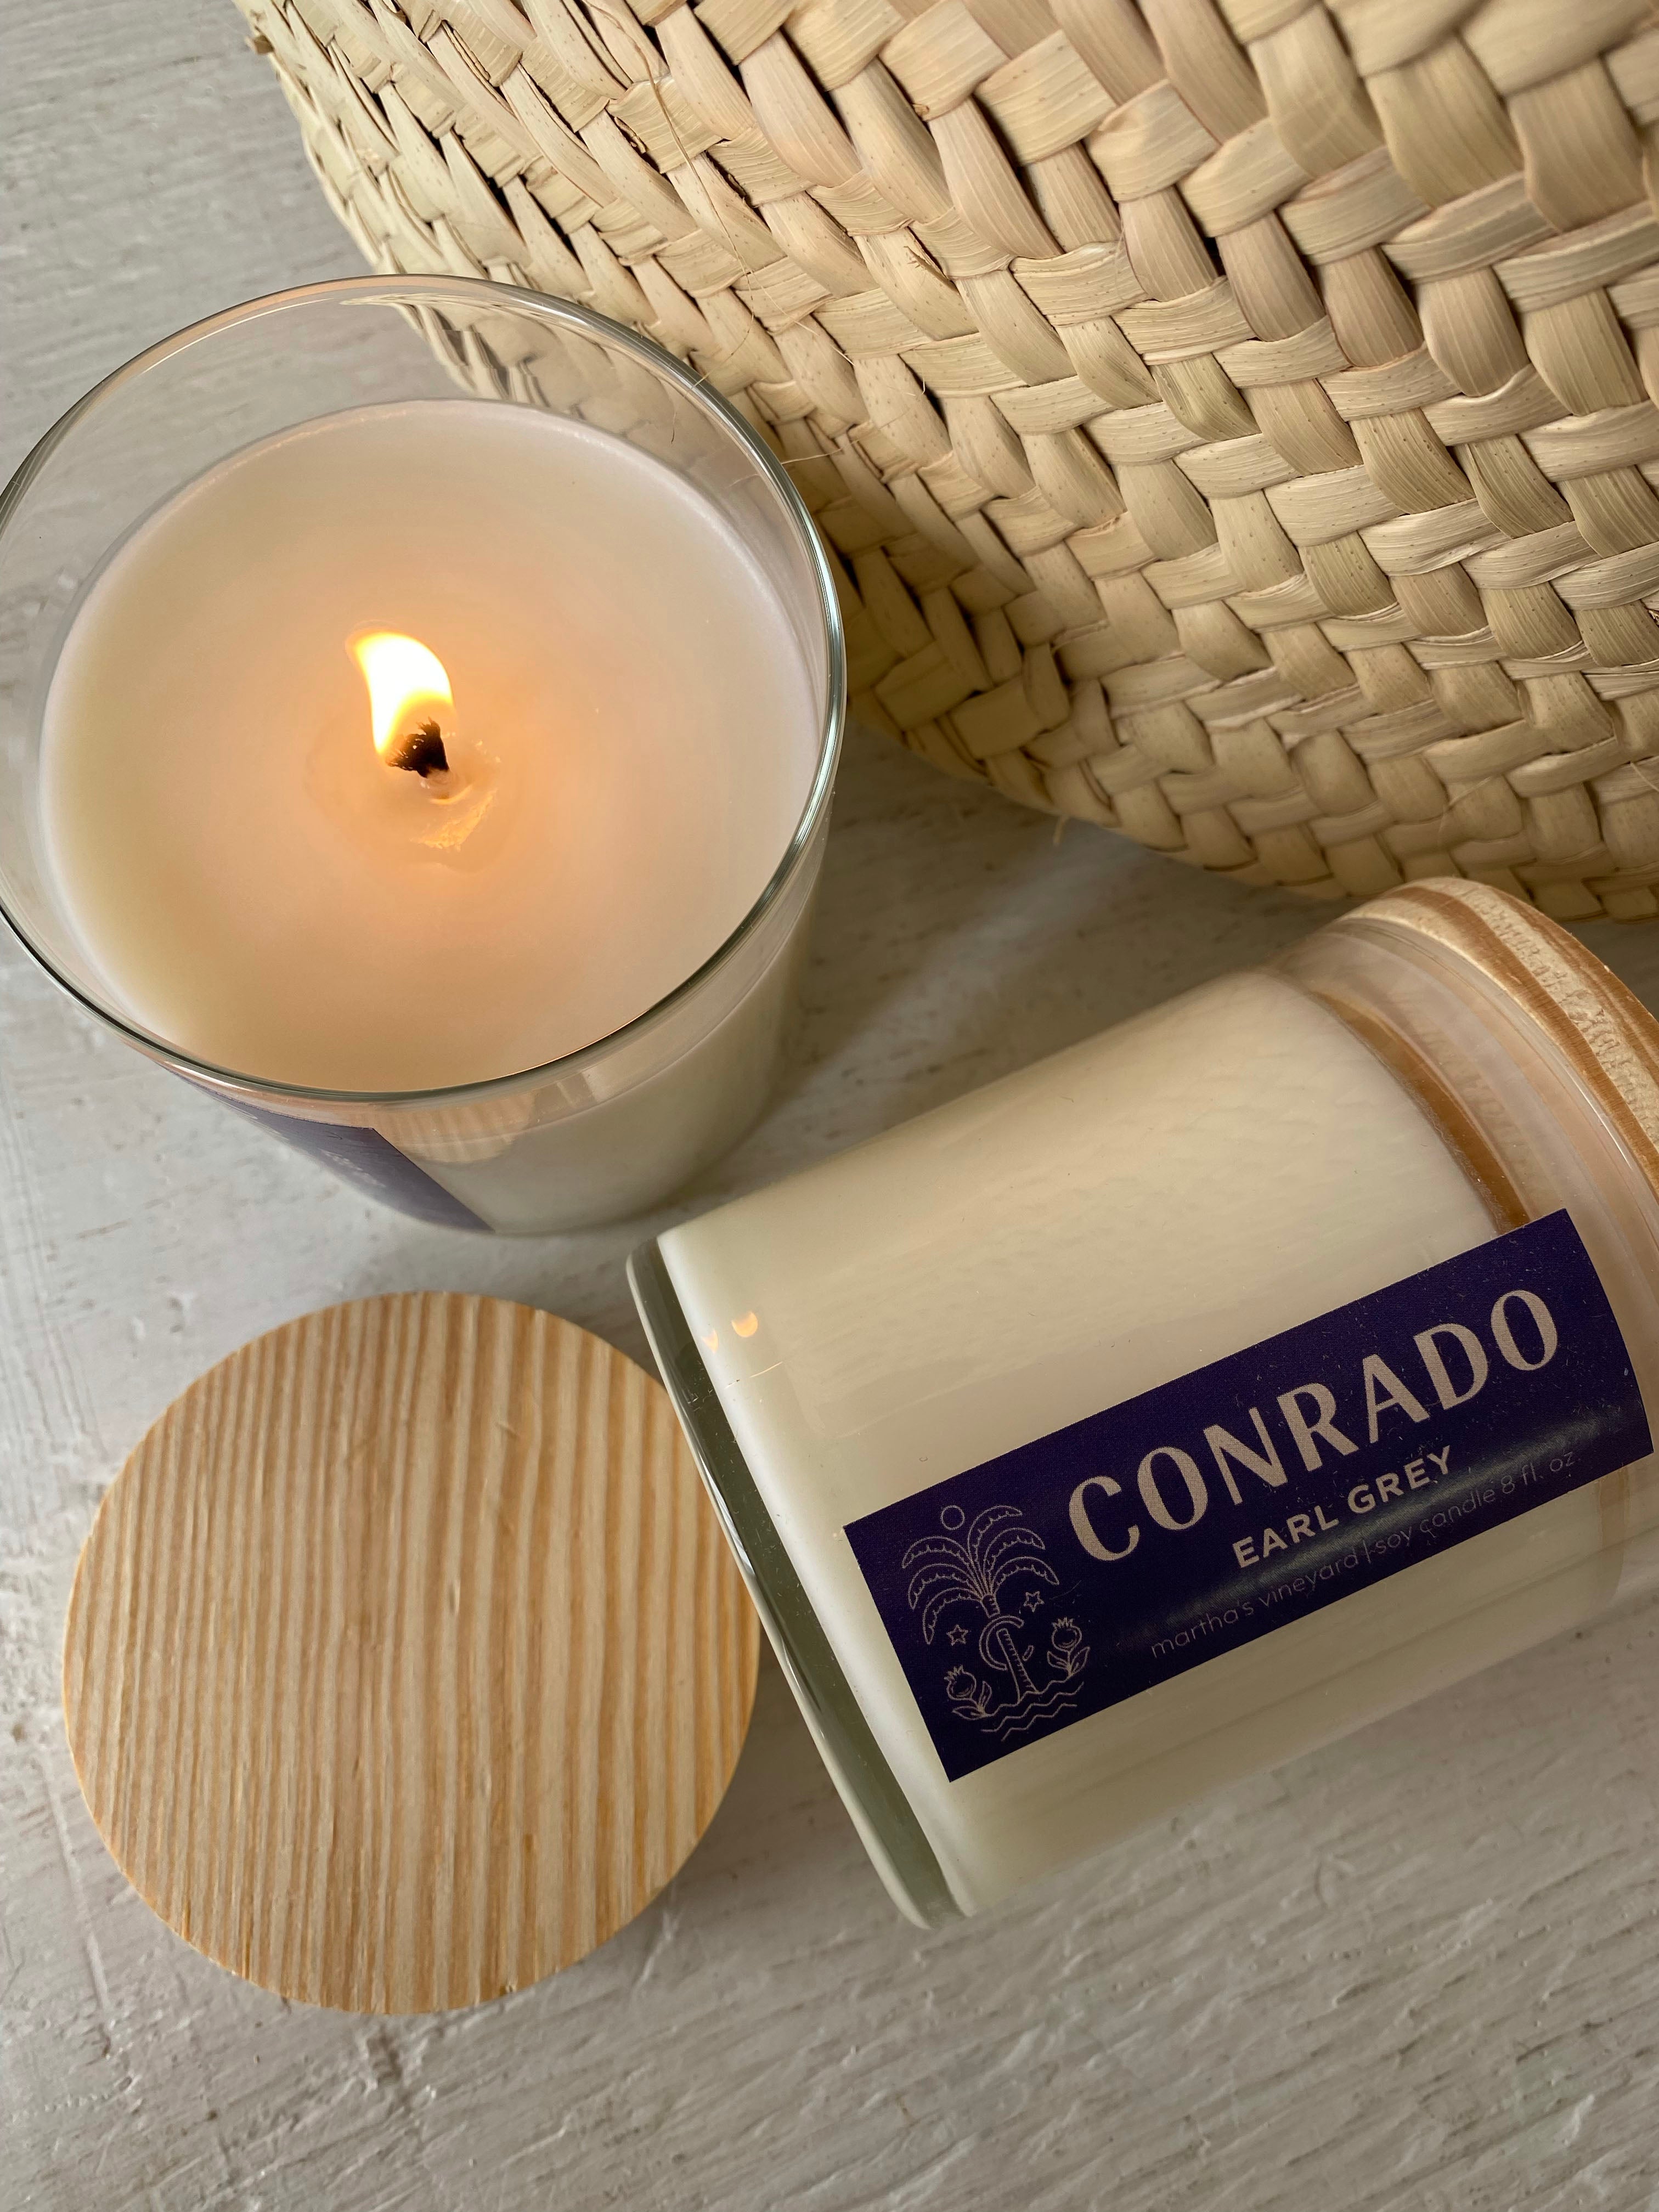 Conrado Organic Soy Candle (Earl Grey)